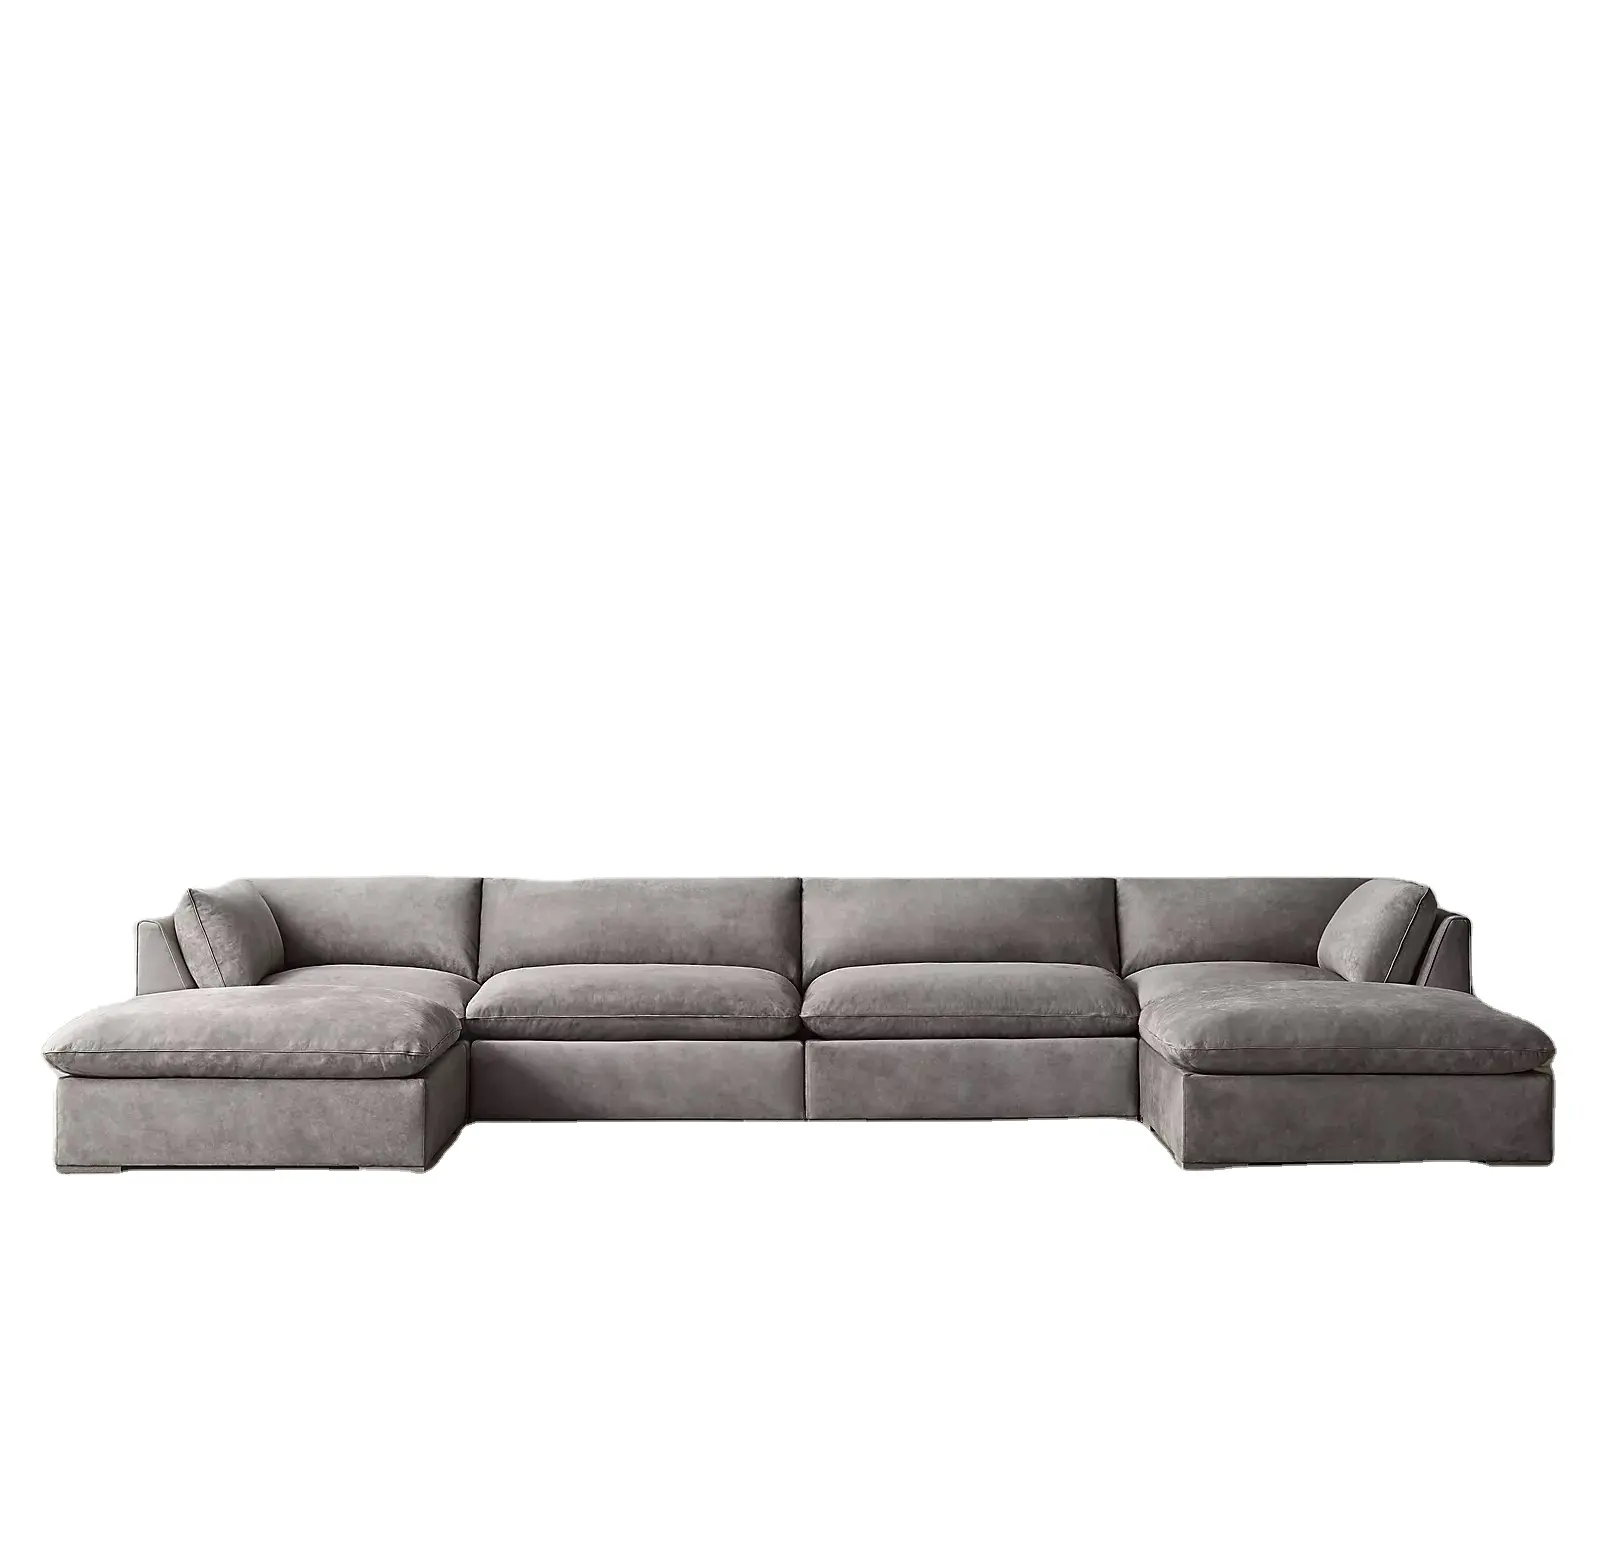 Luxury modern living room furniture American style leather sofa set modular genuine leather customizable sofa sectional